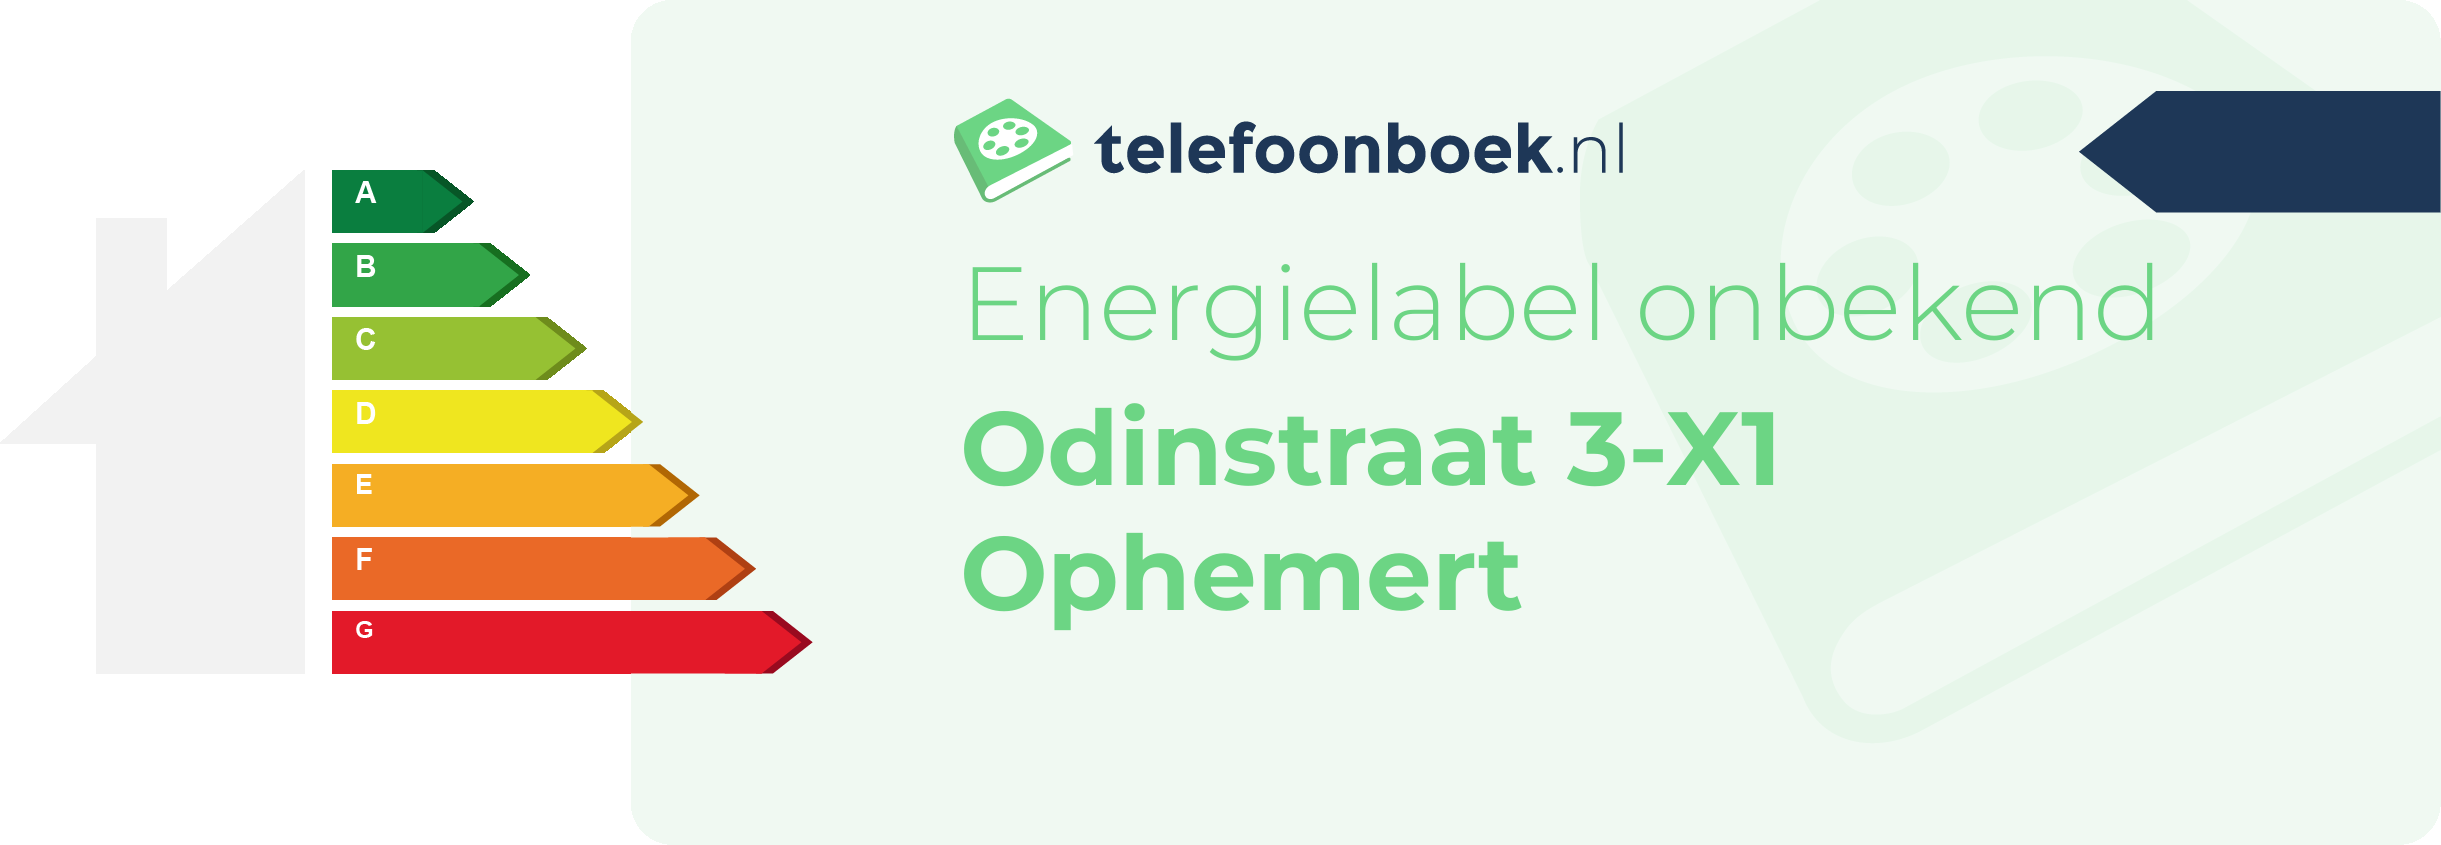 Energielabel Odinstraat 3-X1 Ophemert